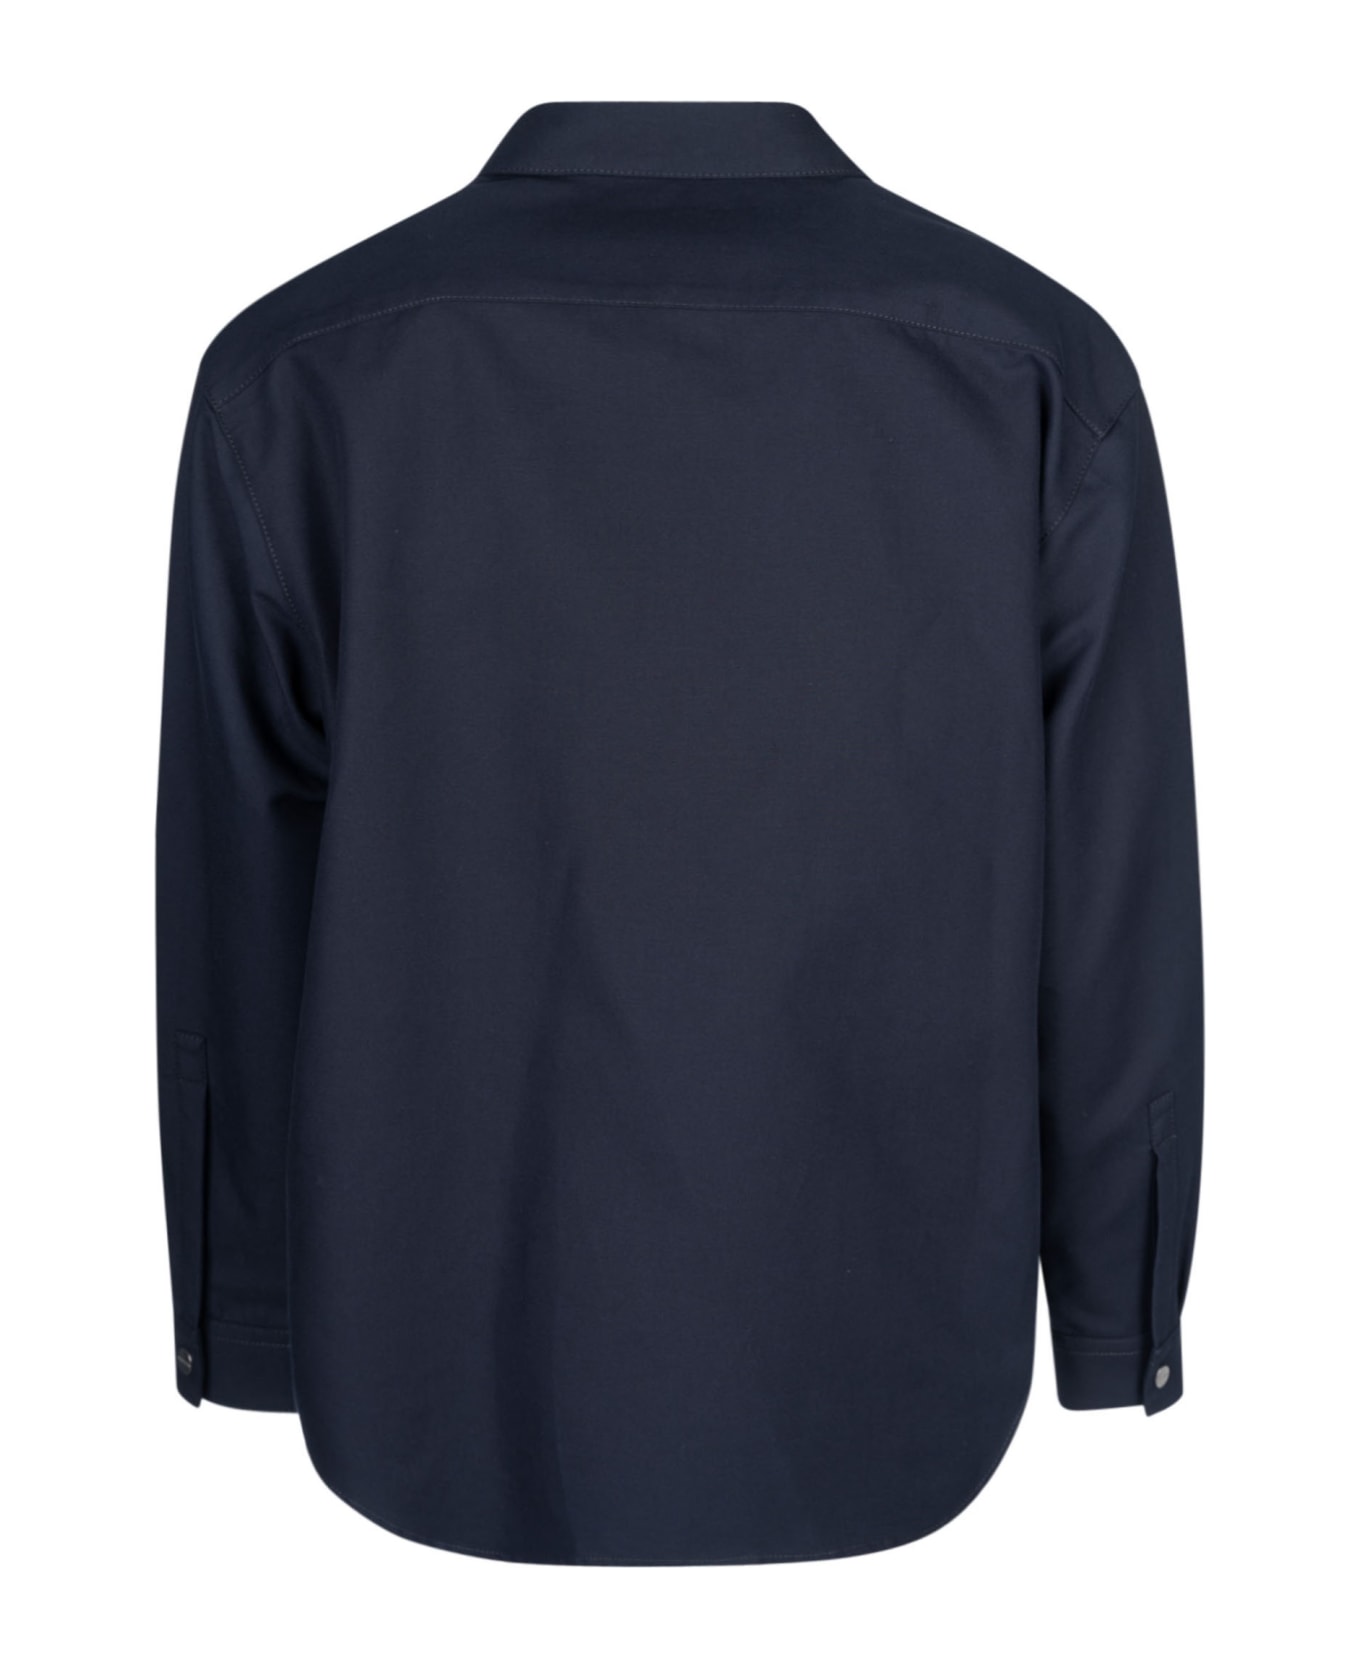 Giorgio Armani Concealed Button Jacket - Night Blue